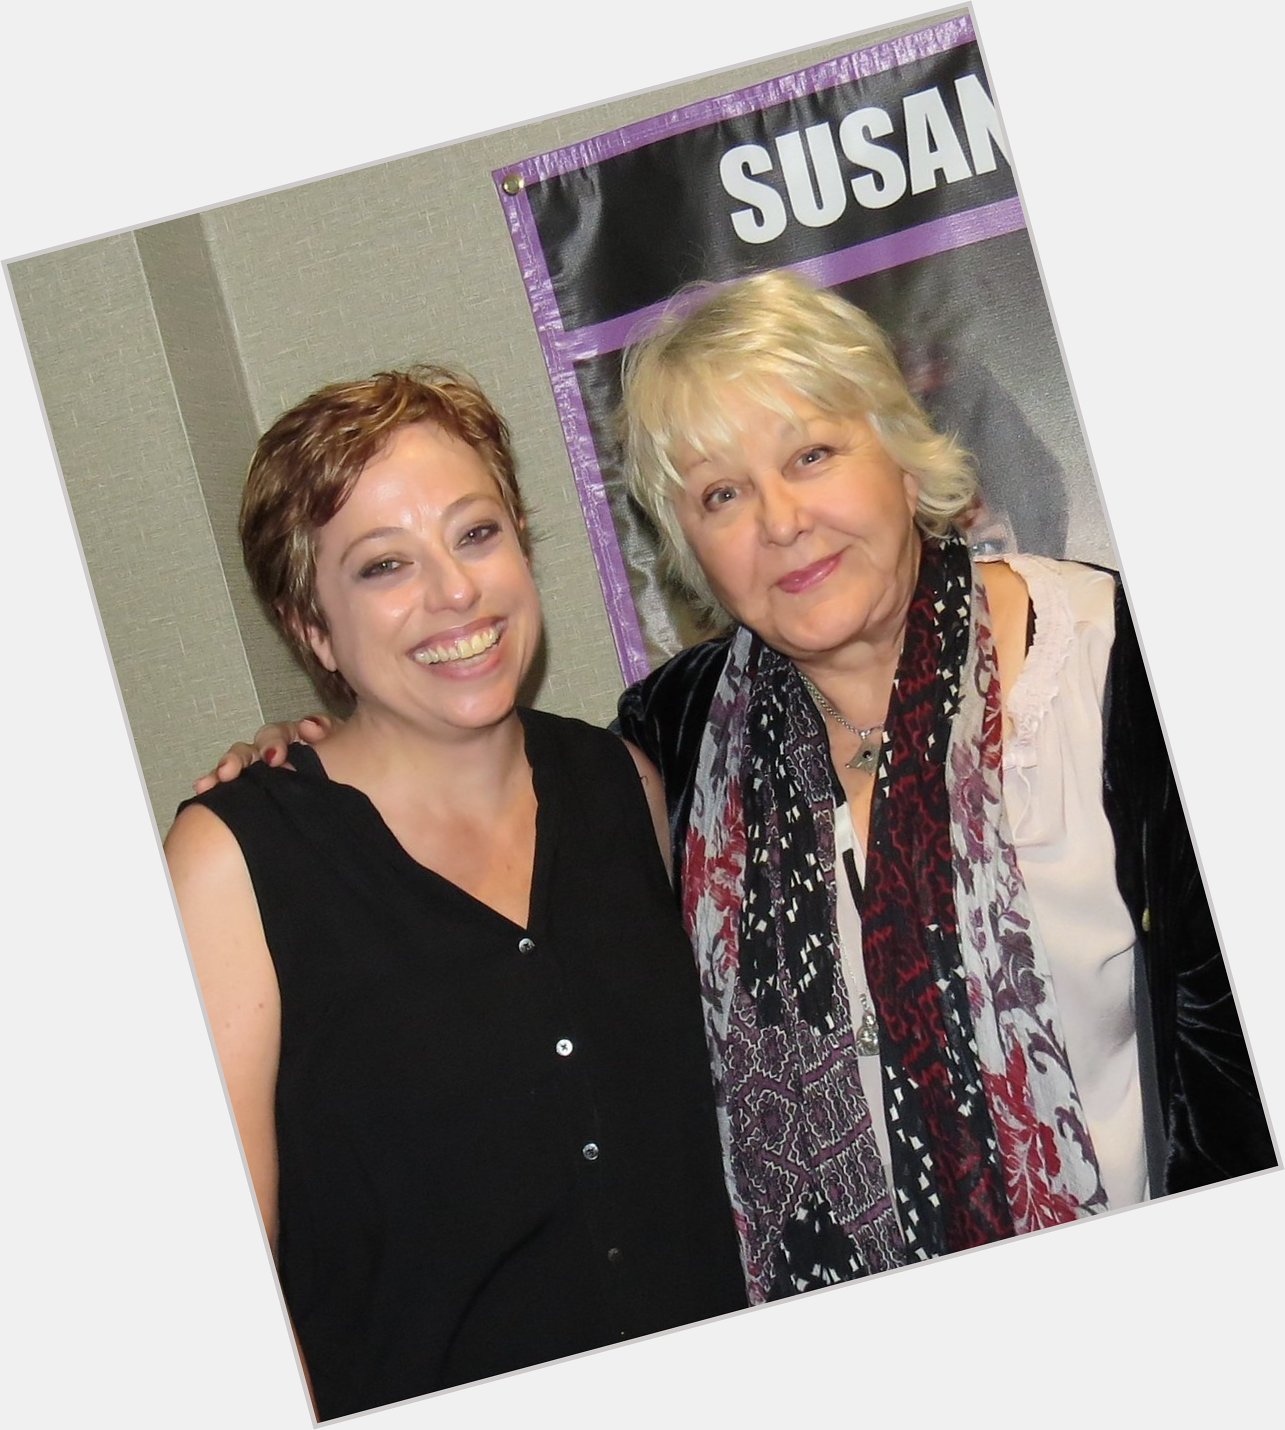 Happy birthday Susan Ruttan! I LOVED MEETING HER. She is so nice!! 